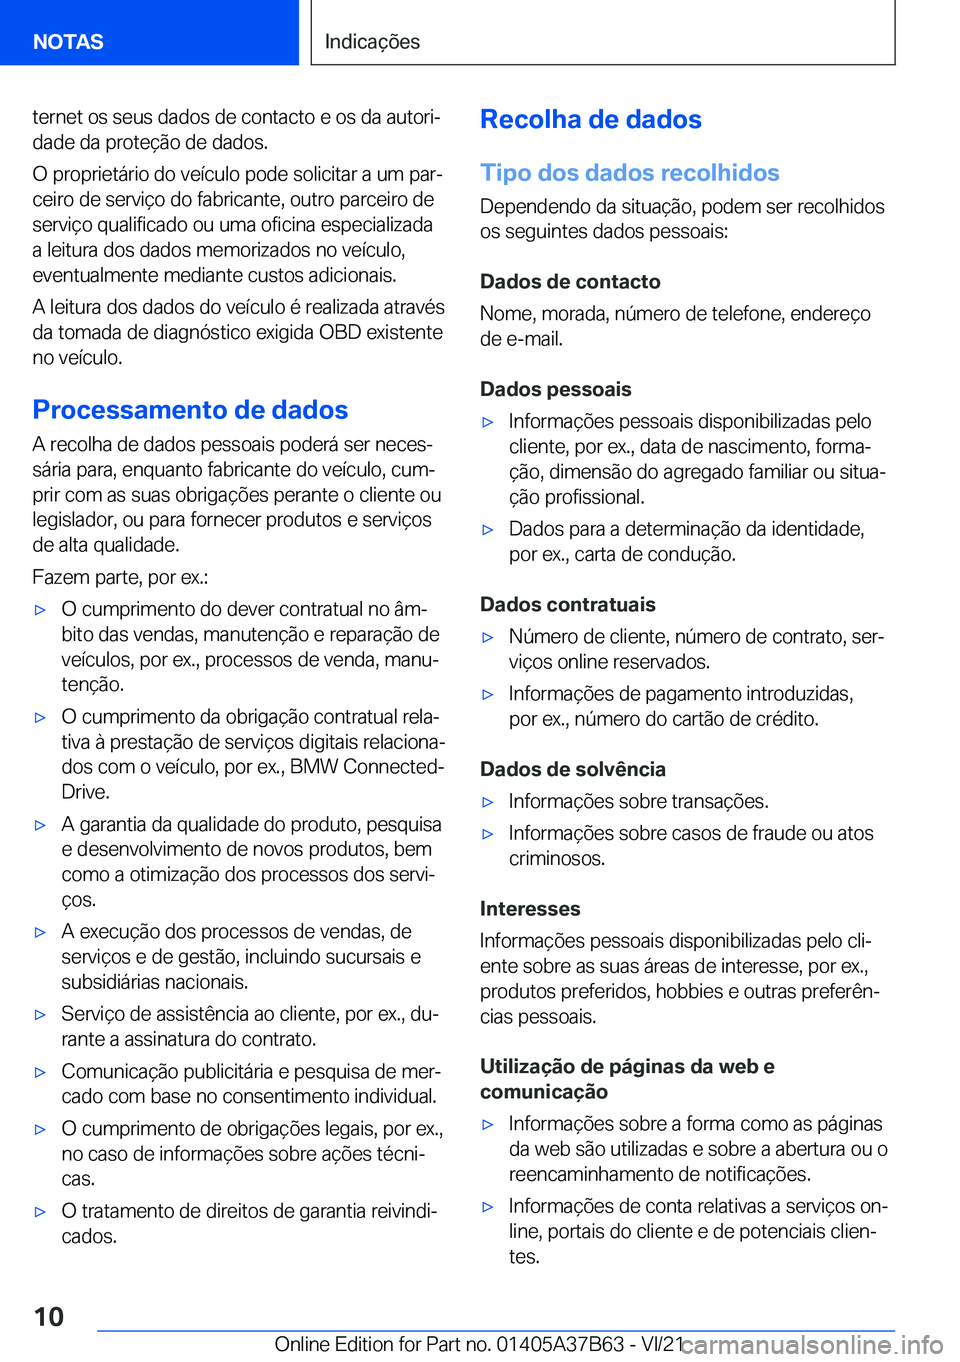 BMW M8 2022  Manual do condutor (in Portuguese) �t�e�r�n�e�t��o�s��s�e�u�s��d�a�d�o�s��d�e��c�o�n�t�a�c�t�o��e��o�s��d�a��a�u�t�o�r�iª
�d�a�d�e��d�a��p�r�o�t�e�